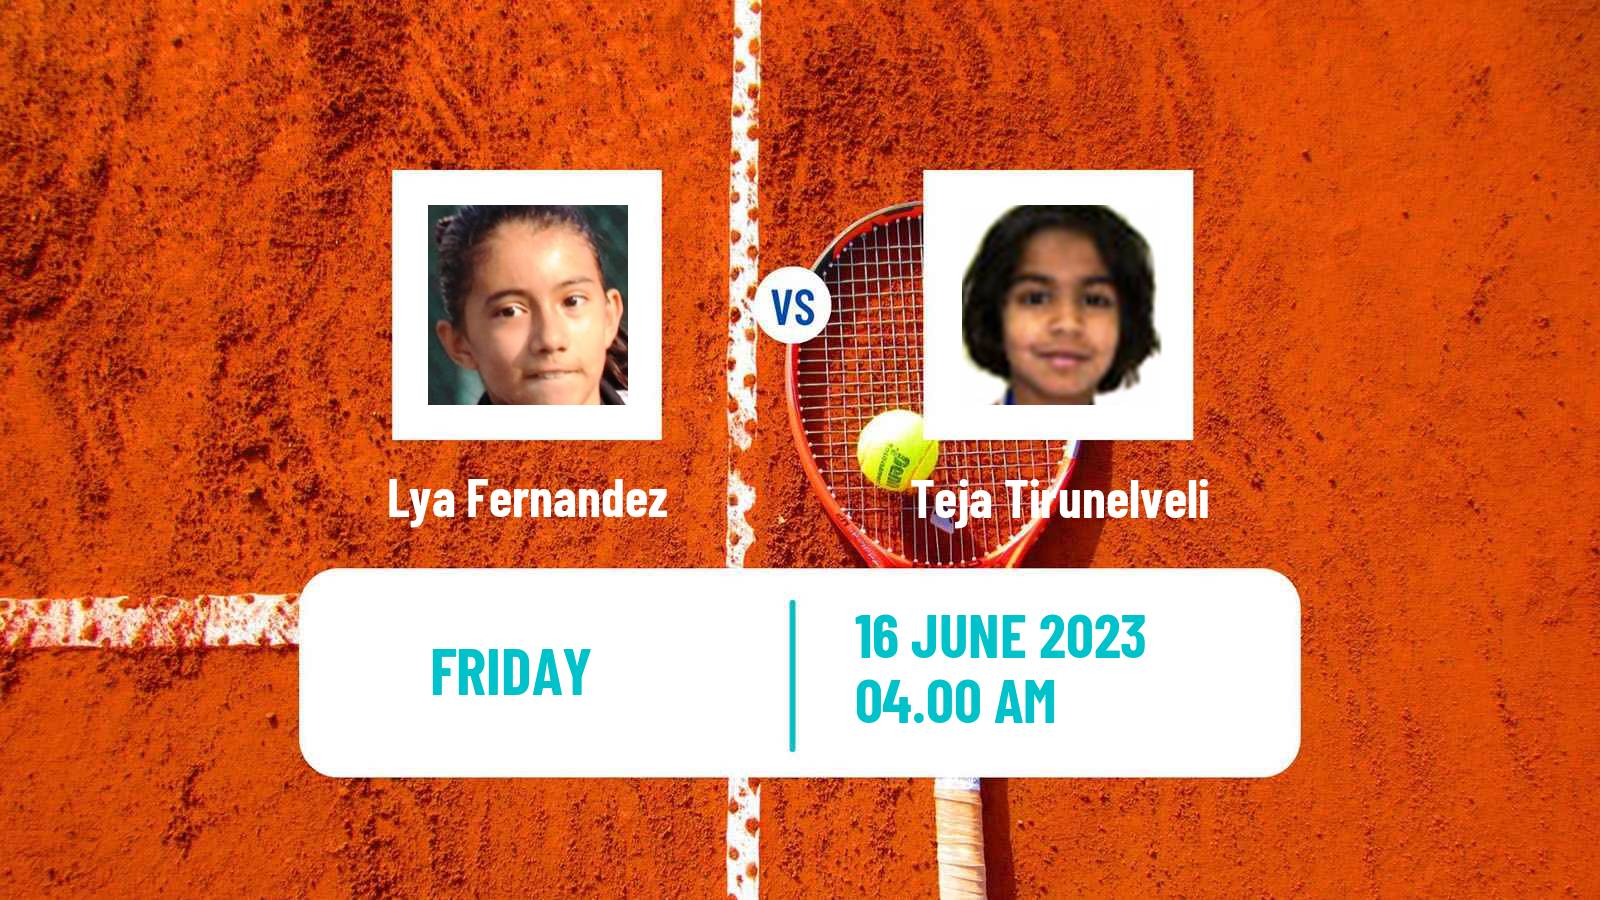 Tennis ITF W15 Monastir 19 Women Lya Fernandez - Teja Tirunelveli